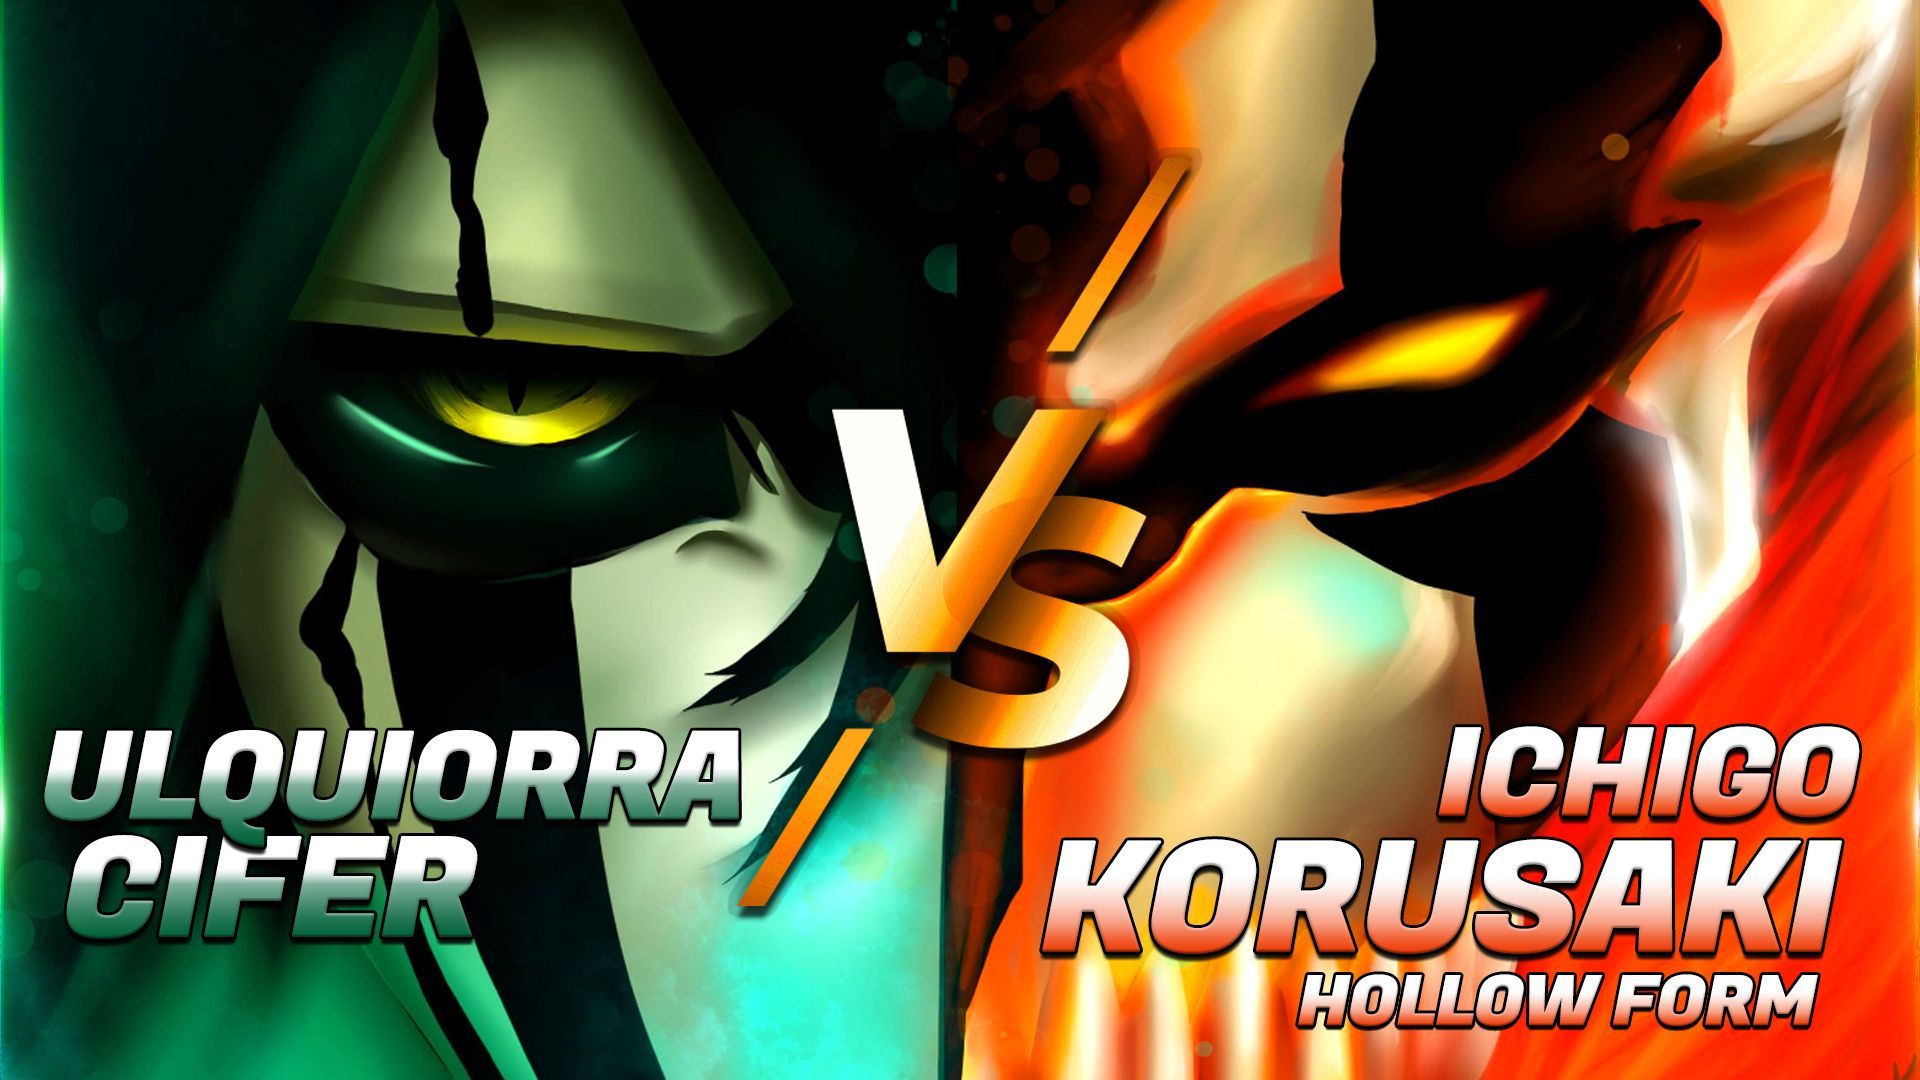 Ichigo Kurosaki vs. Ulquiorra Cifer: Final Fight